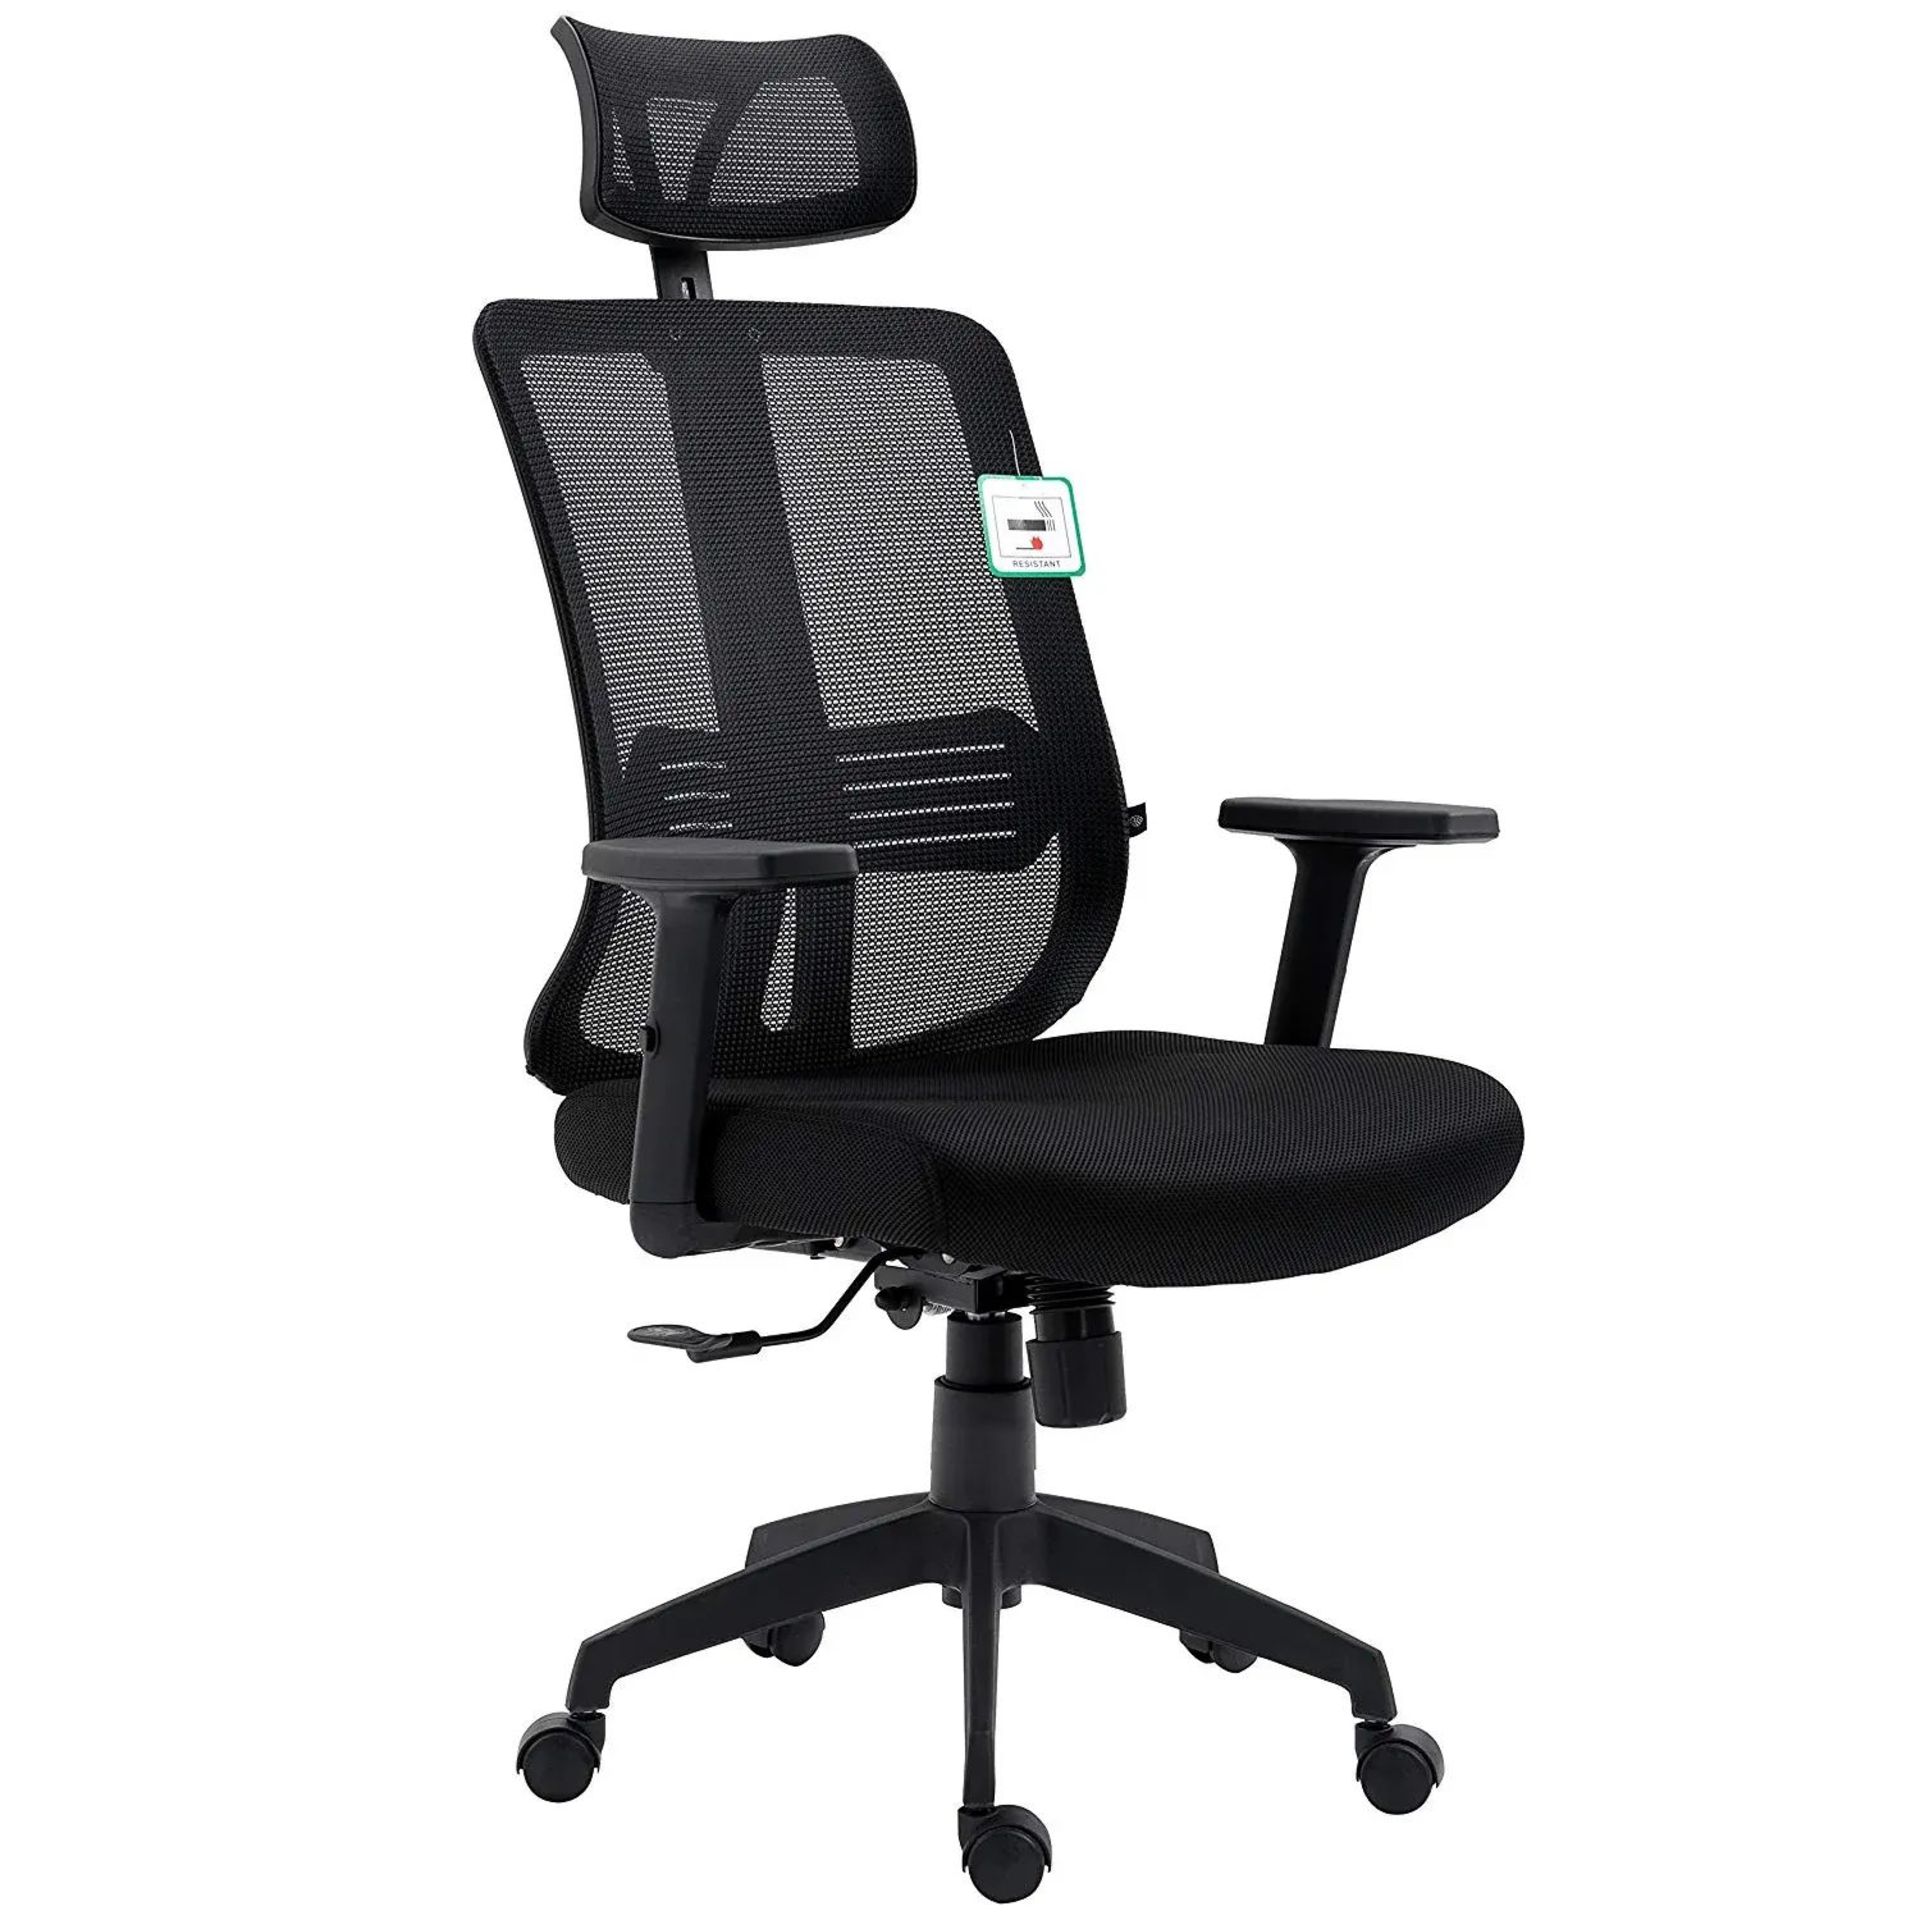 Black Mesh High Back Executive Office Chair Swivel Desk Chair with Synchro-Tilt, Adjustable